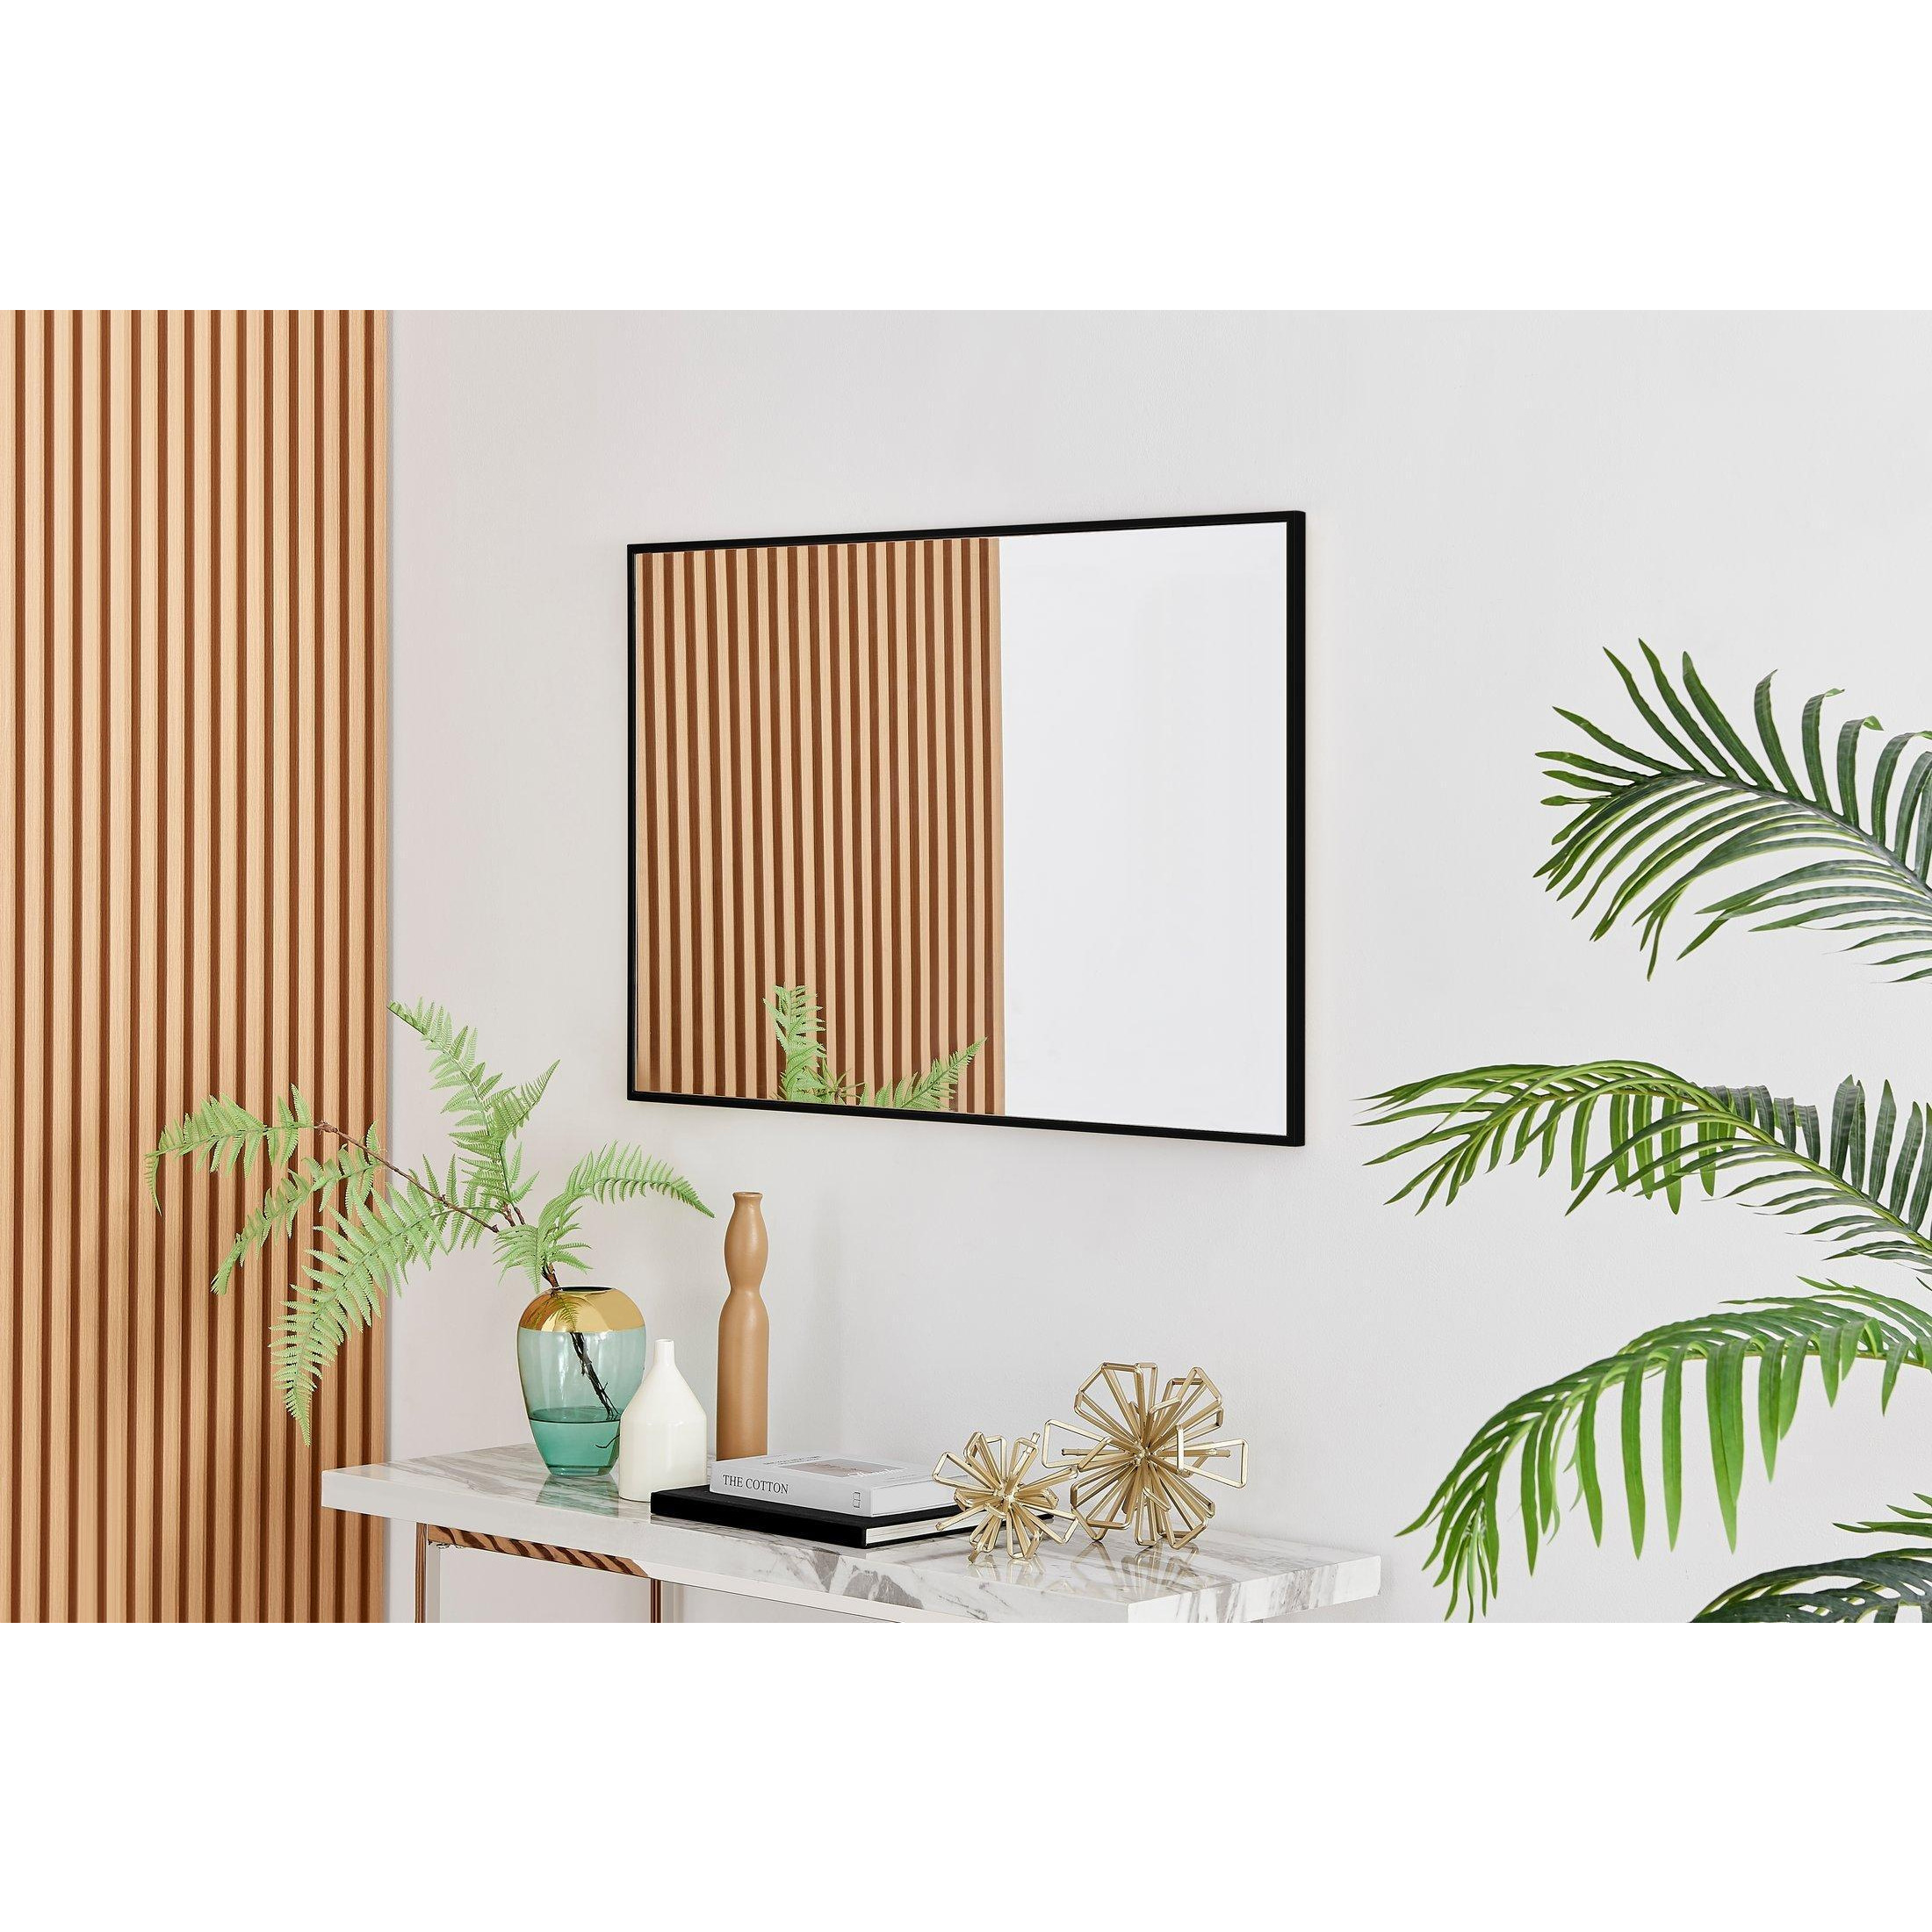 Emma Small 100x66cm Framed Rectangular Vertical Living Room Hallway Wall Mirror - image 1